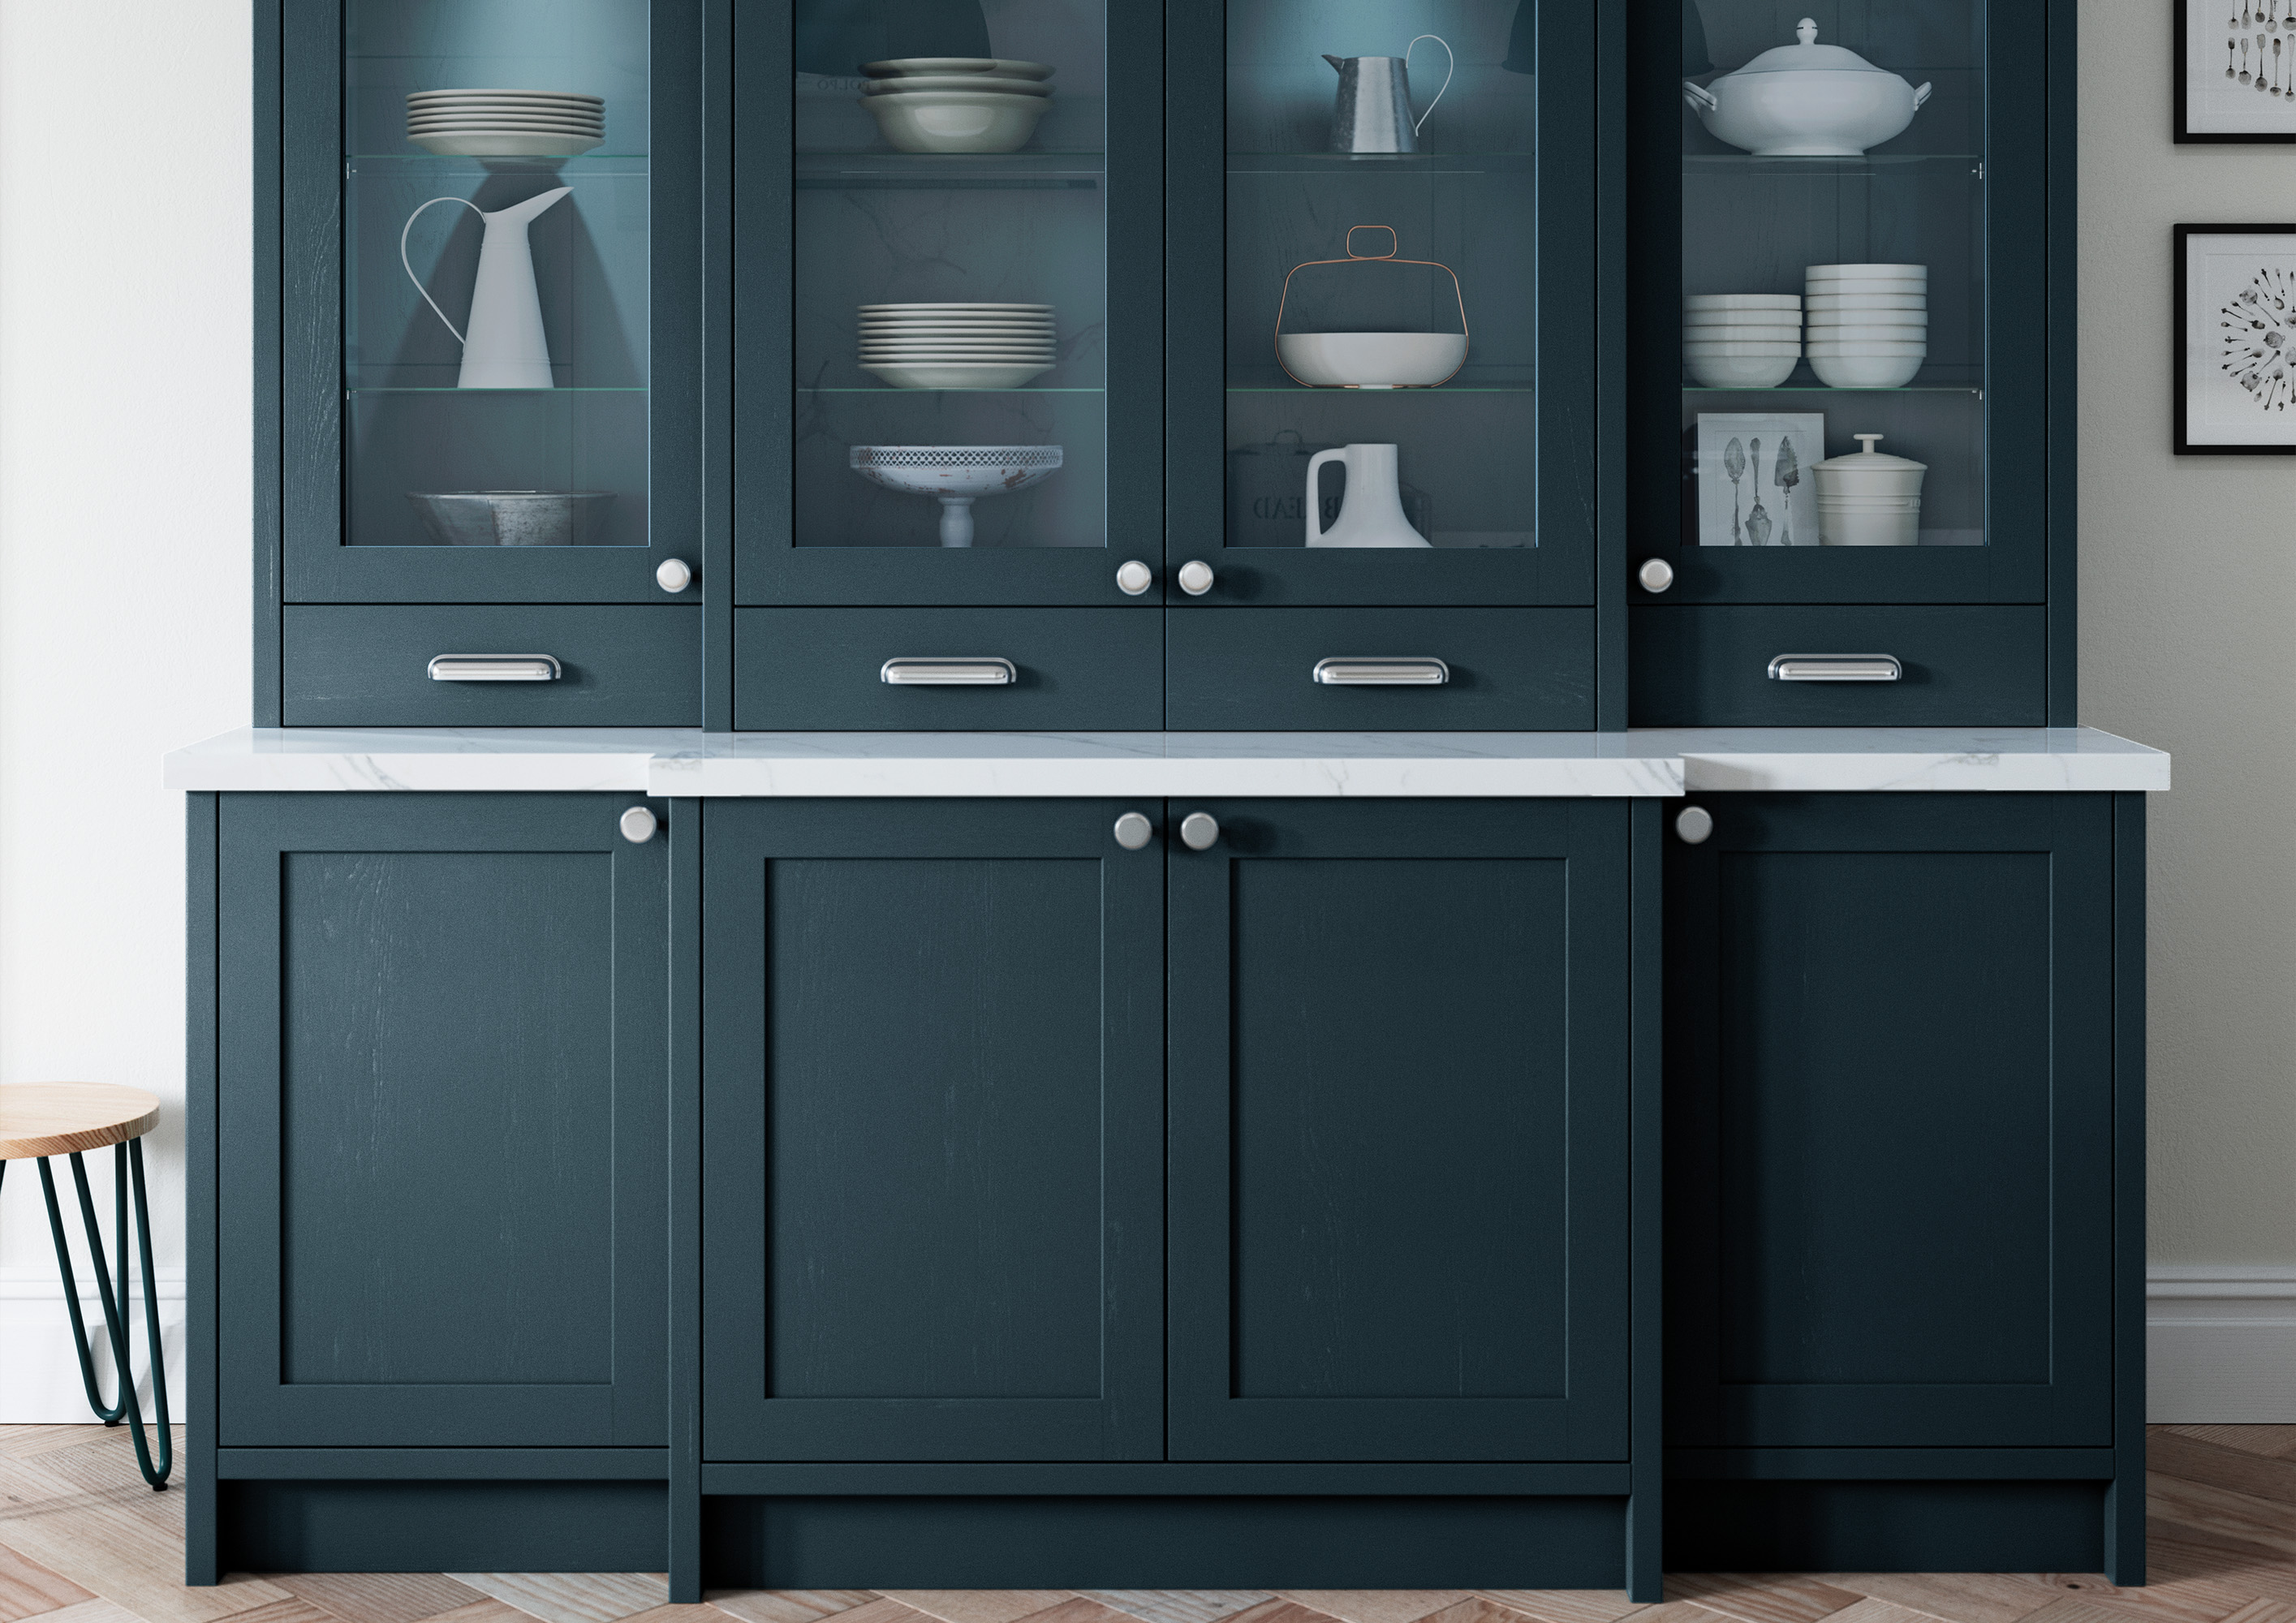 Aldana Marine Painted Kitchen Doors : Cheap Kitchen Units and Cabinets ...